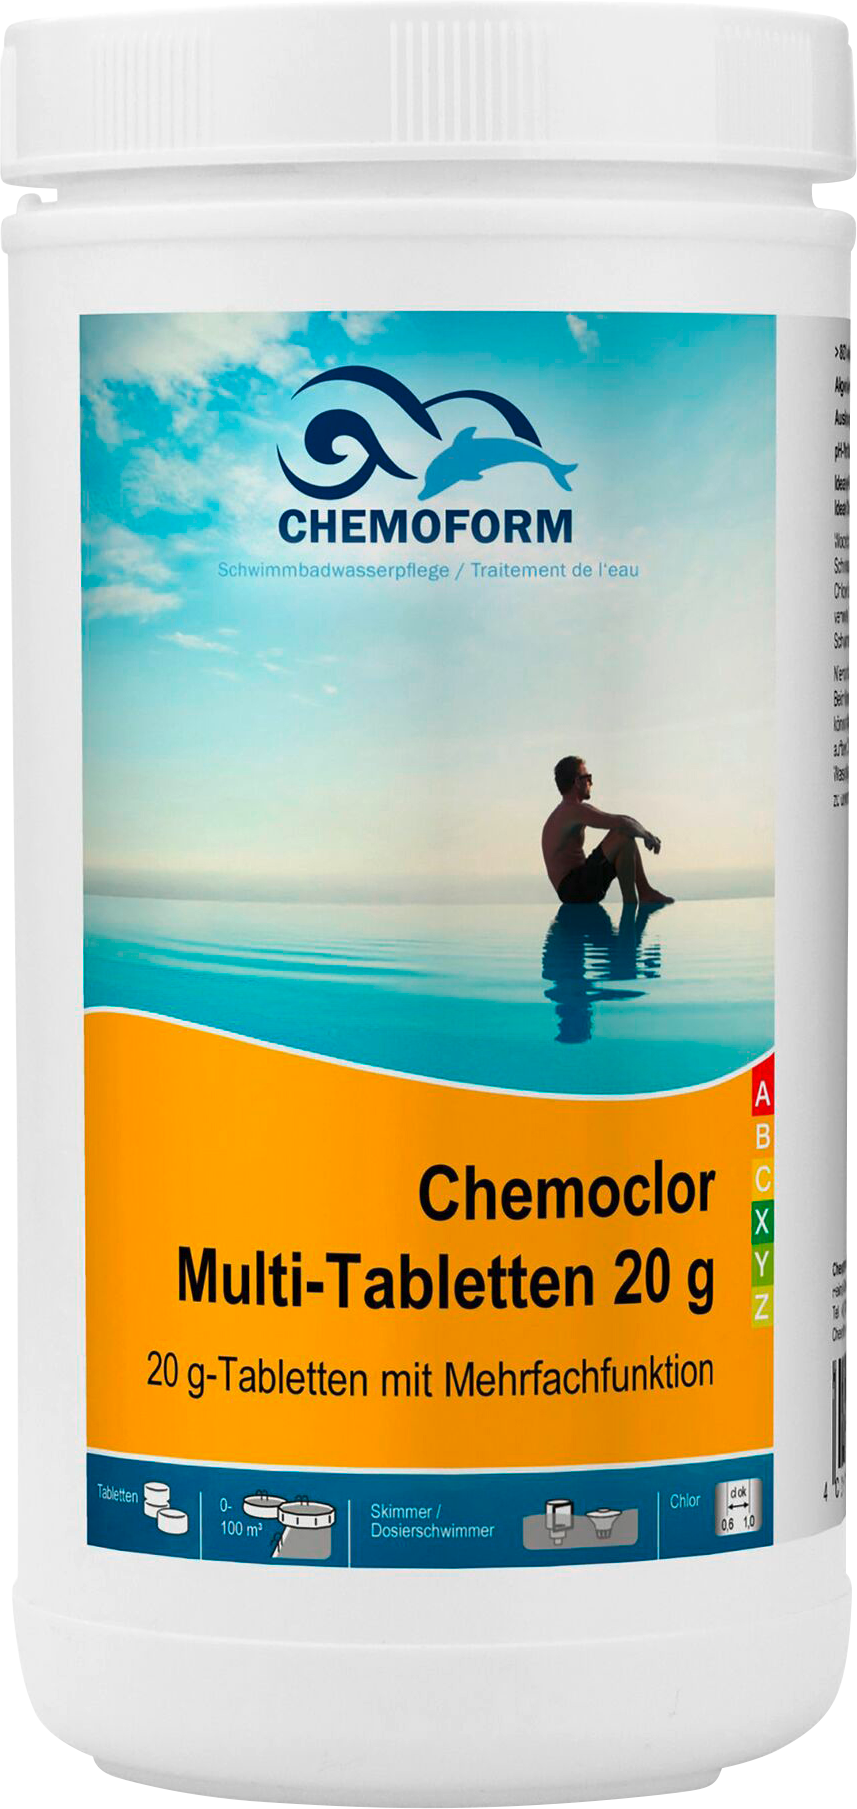 Chemoclor Multi-Tabletten 20 g – 1 kg